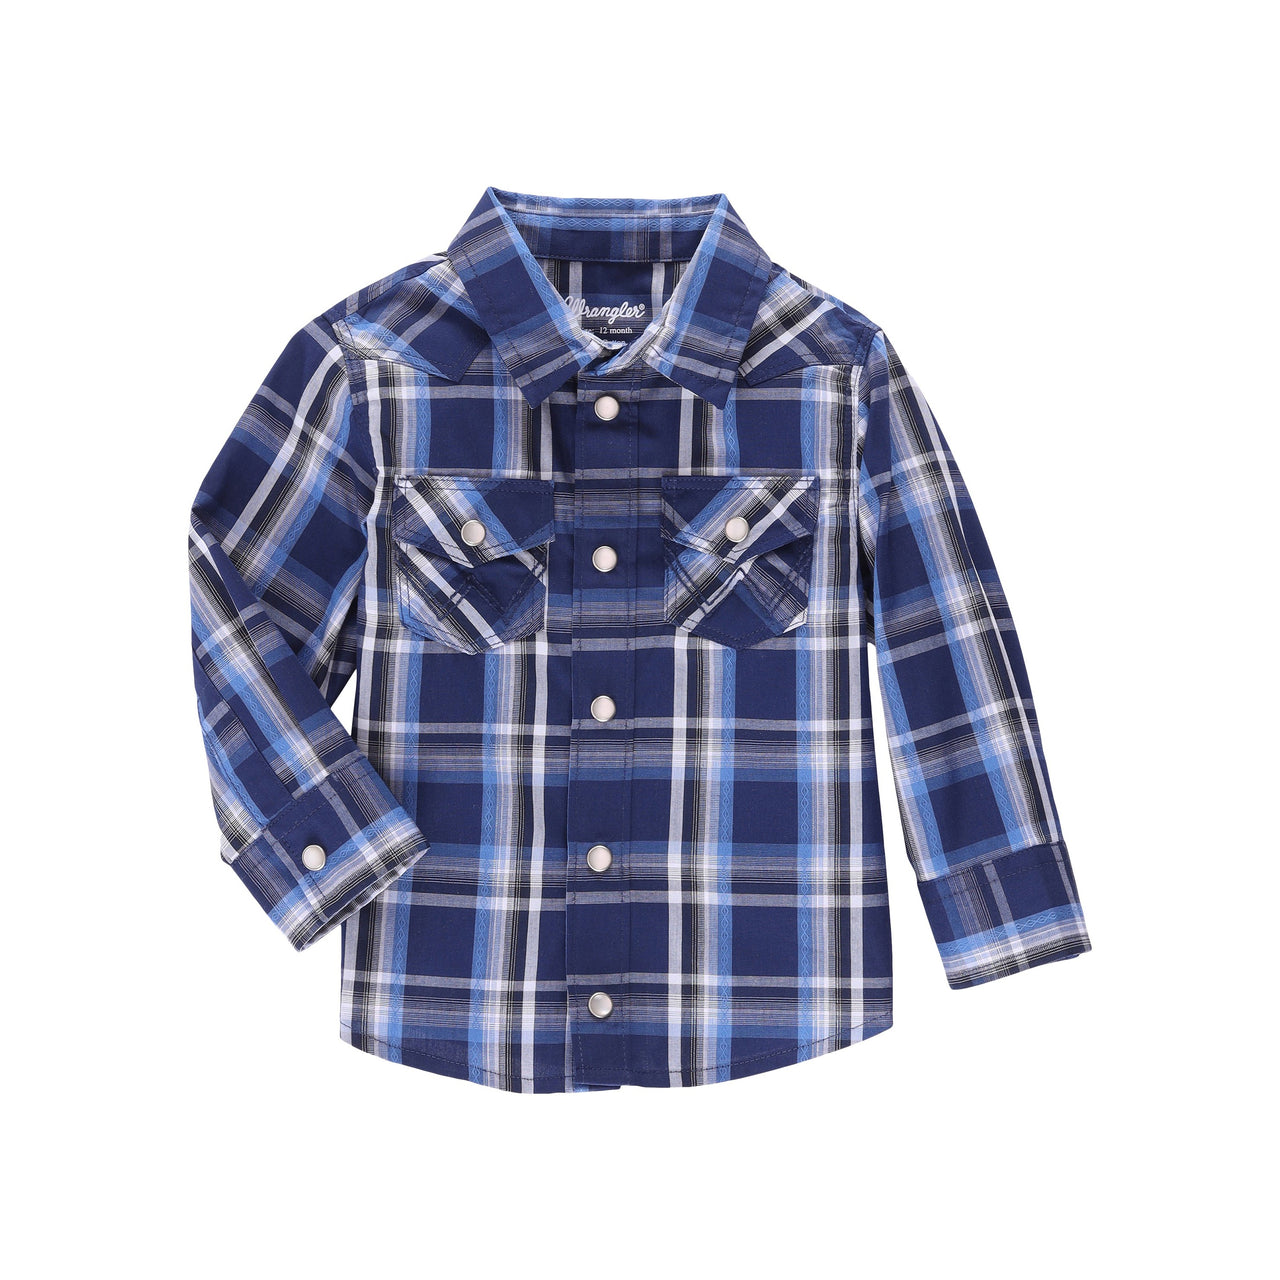 Wrangler Baby Boy's Shirt - Blue